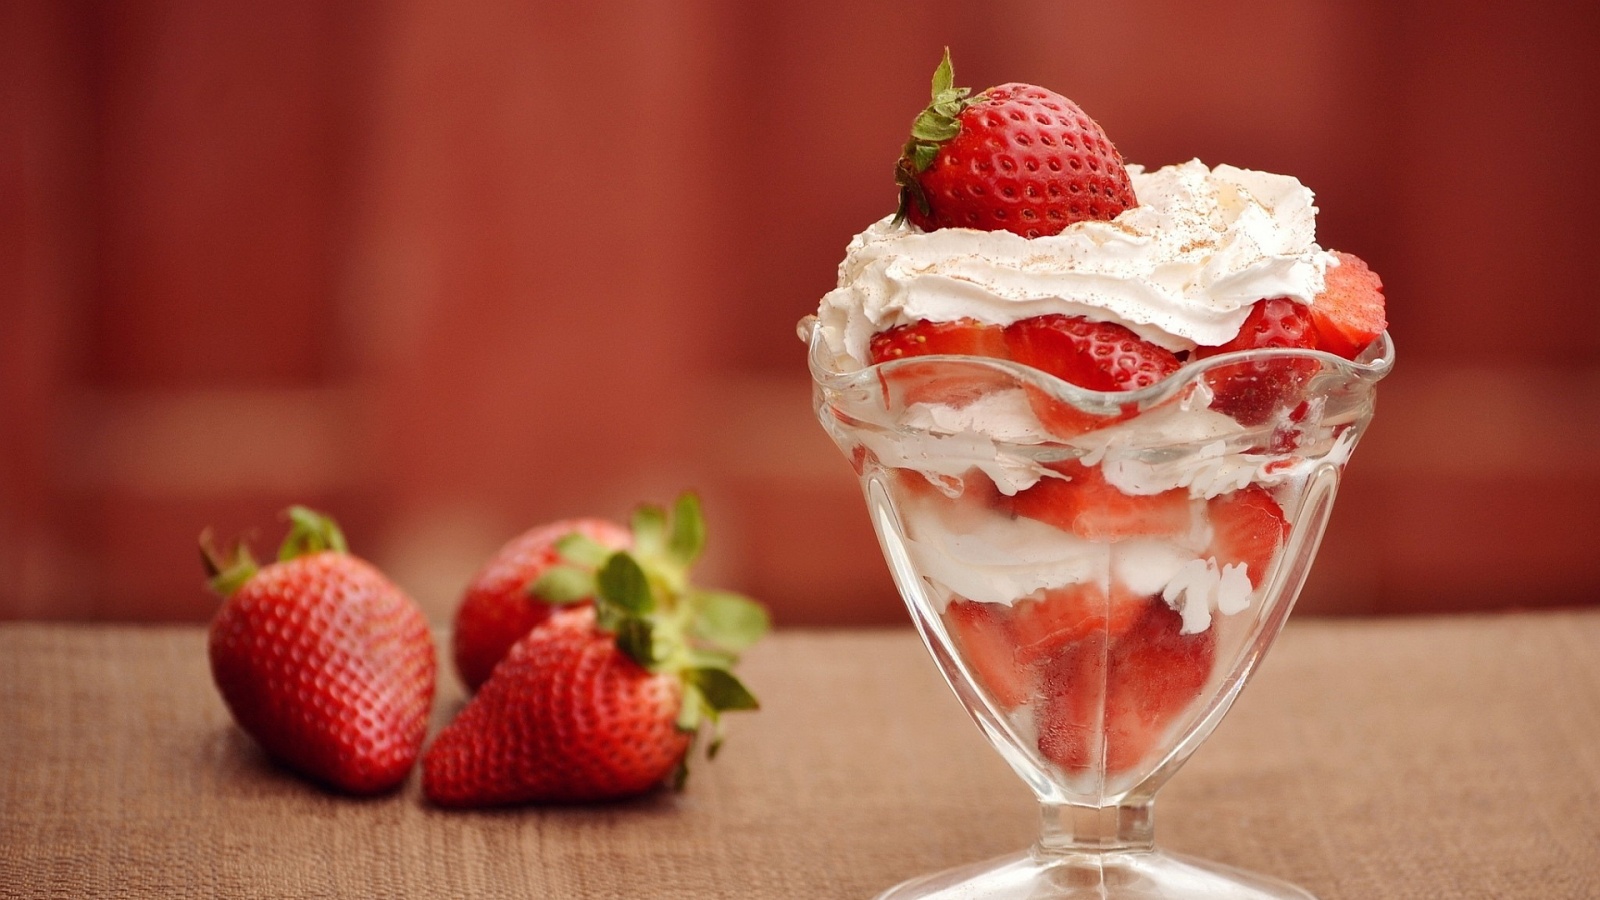 Strawberry Dessert wallpaperx900